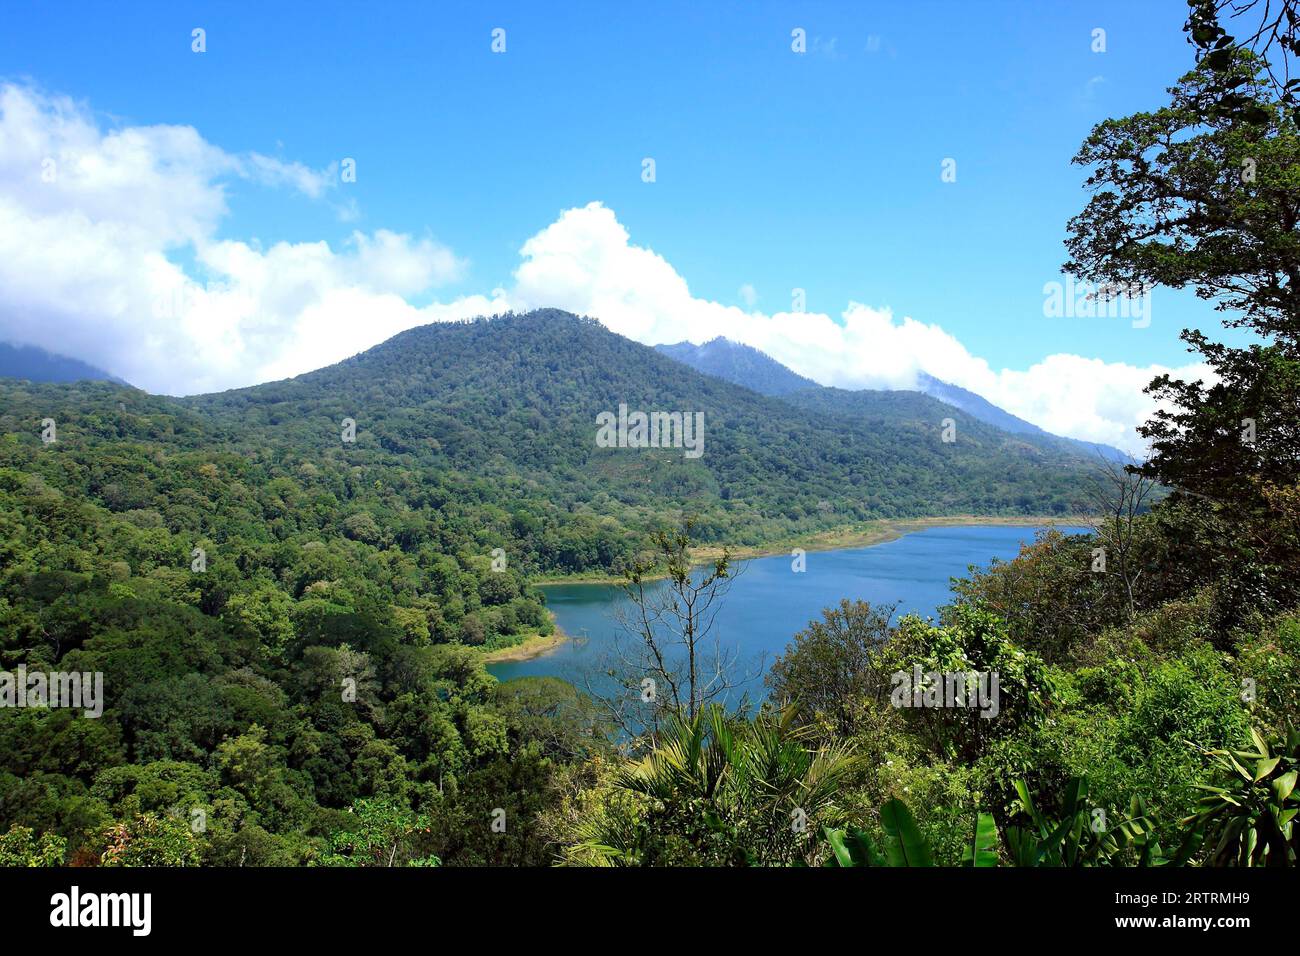 Urwälder und Berge am Lake Tamblingan, Bali, Indonesien Stockfoto